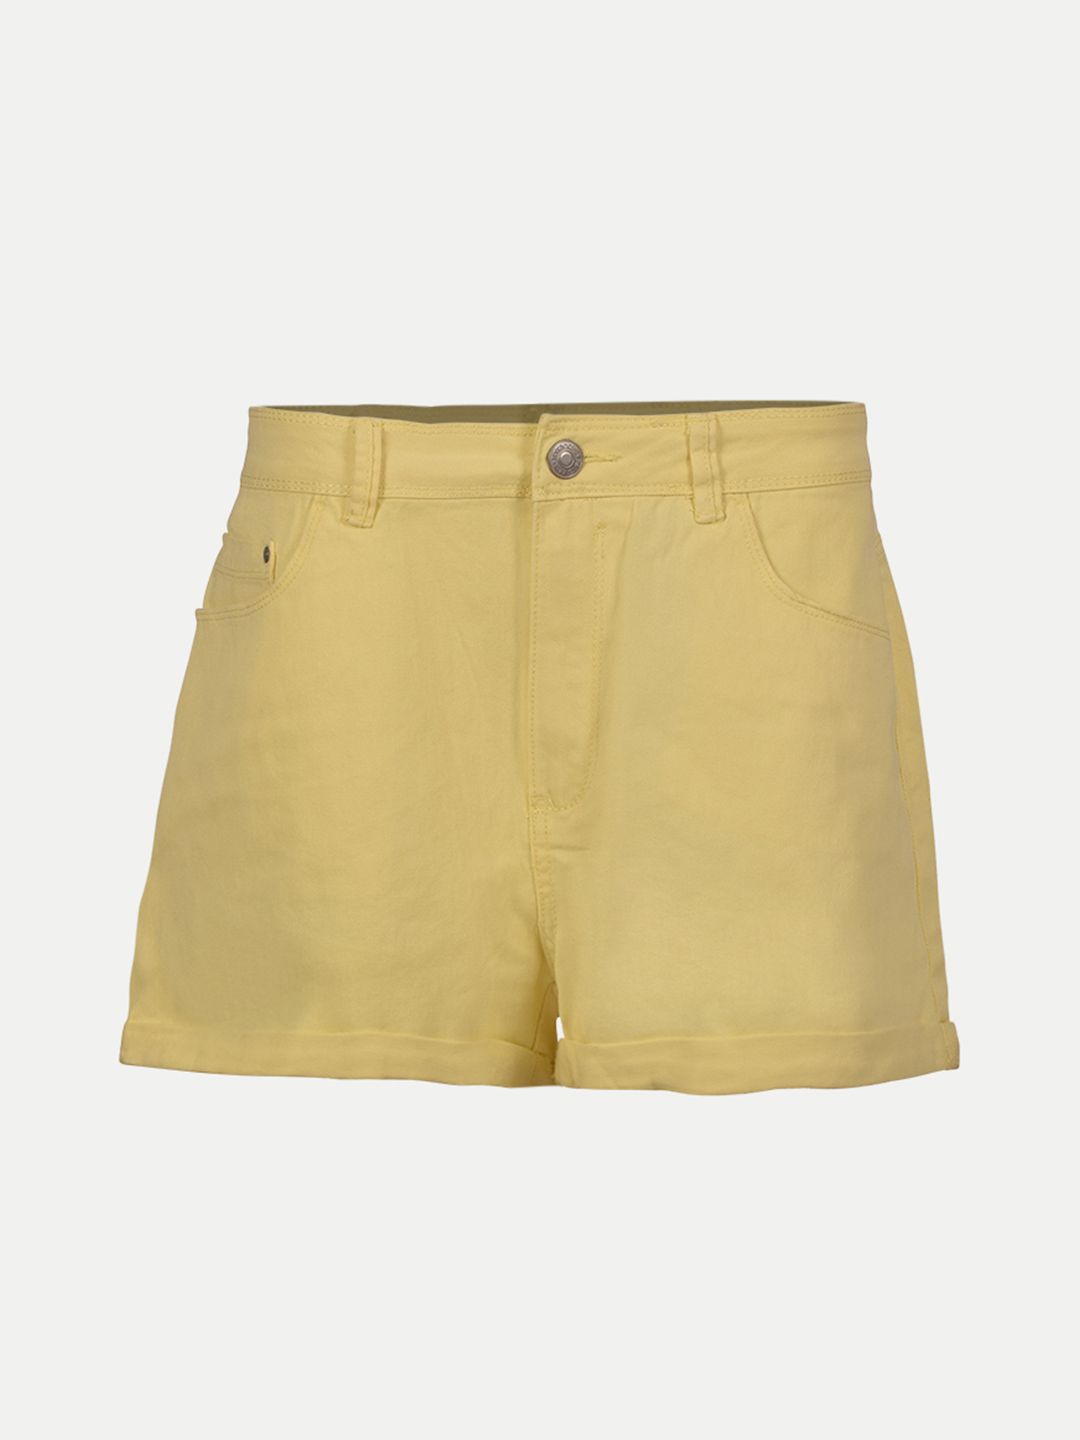 Vintage Wrangler Cut Off Denim Shorts Yellow W26 | eBay